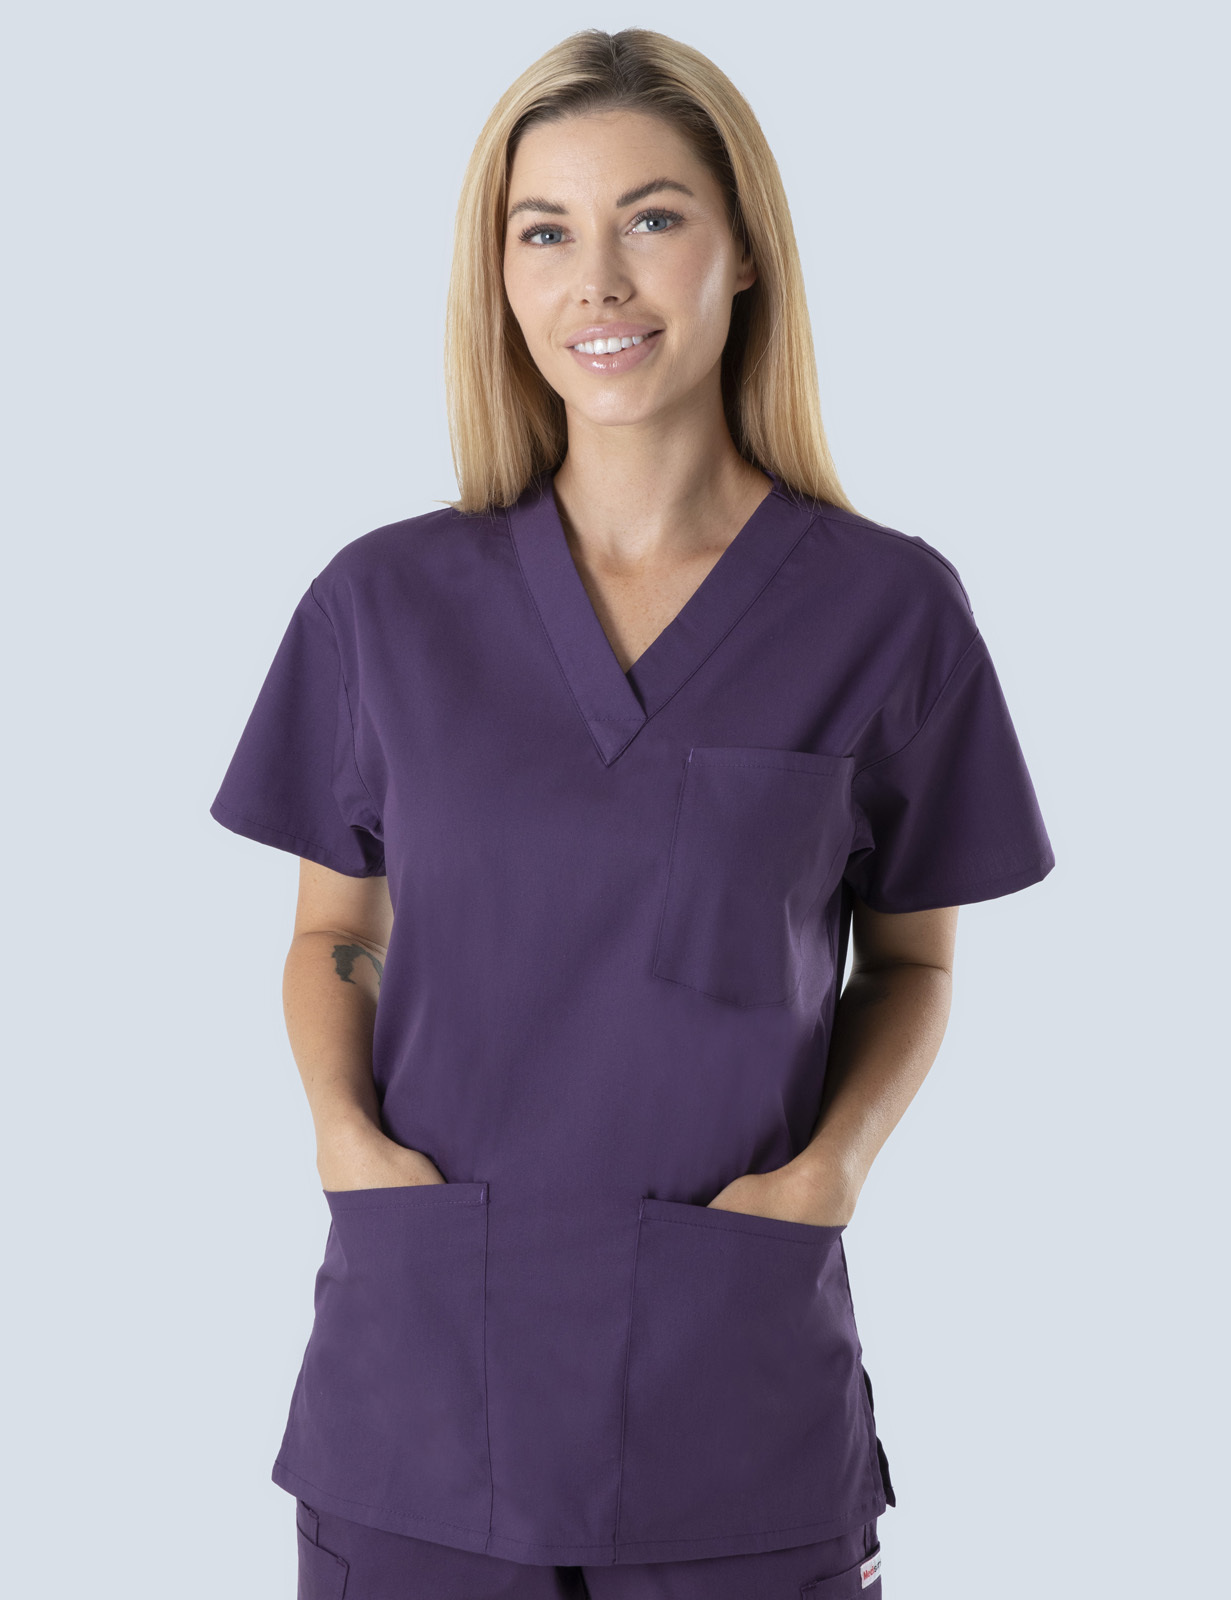 Tweed Hospital Pharmacy - ADMINISTRATION - Aubergine Women's 4 Pocket Scrub Top